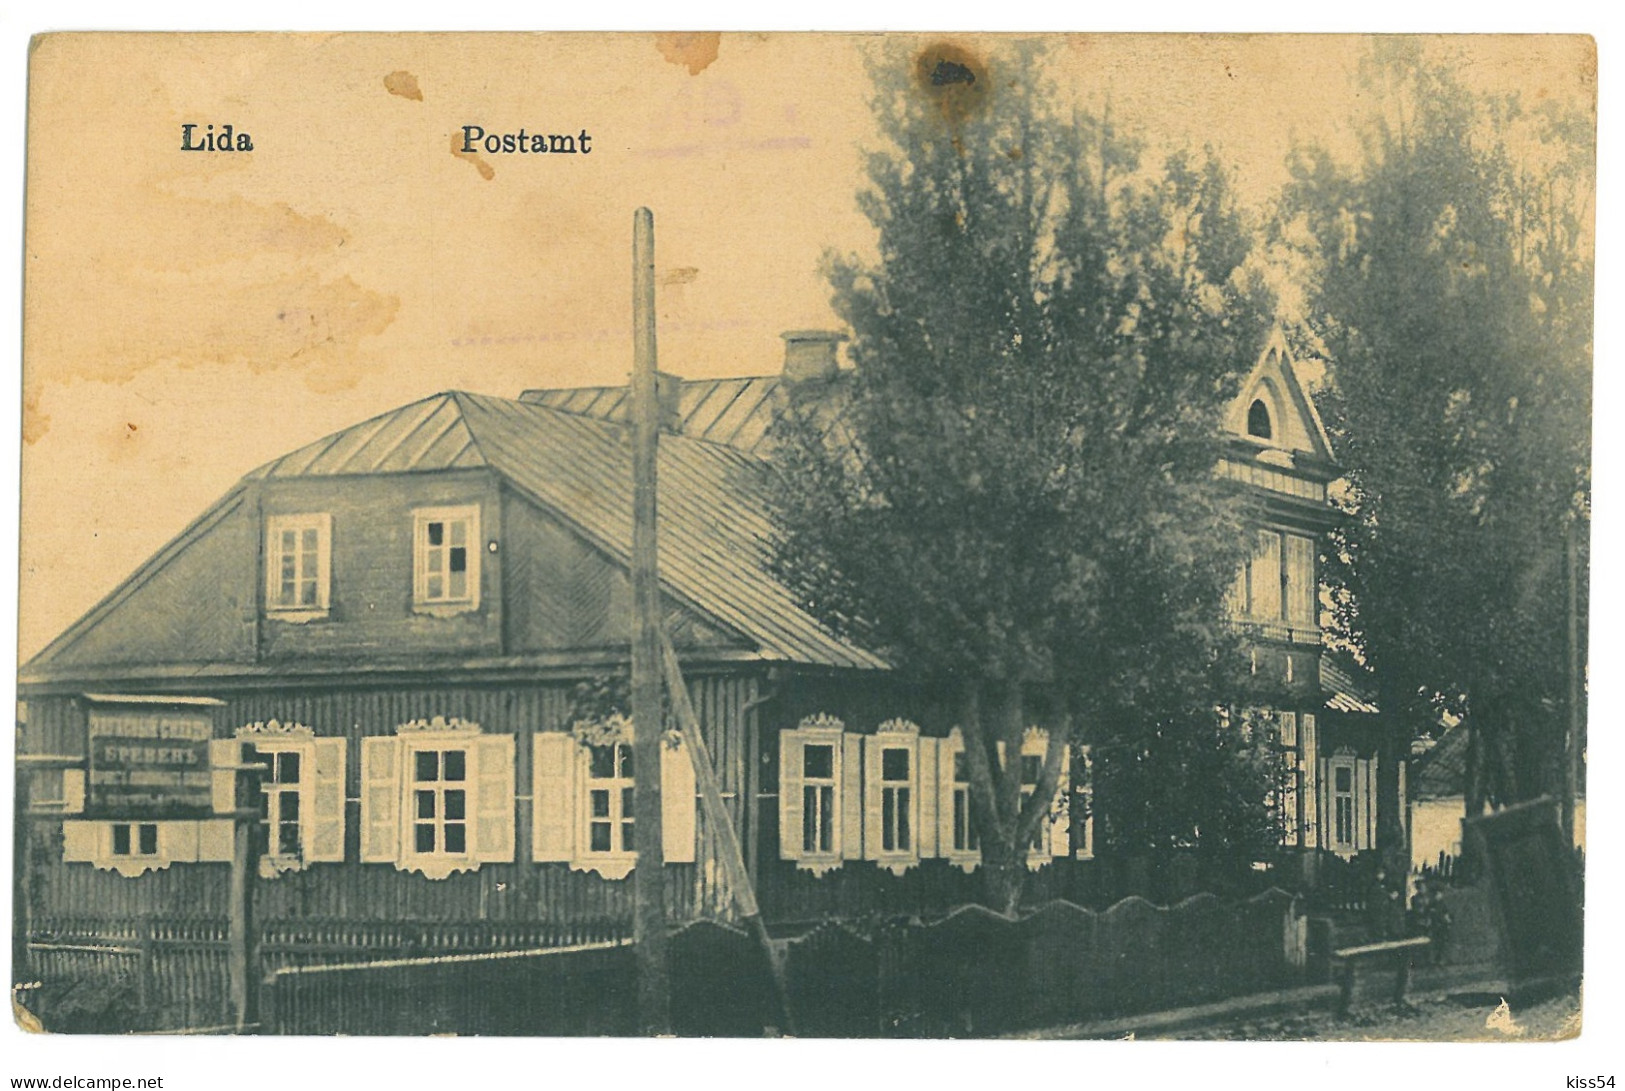 BL 29 - 24070 LIDA, Post Office, Belarus - Old Postcard - Used - 1917 - Bielorussia